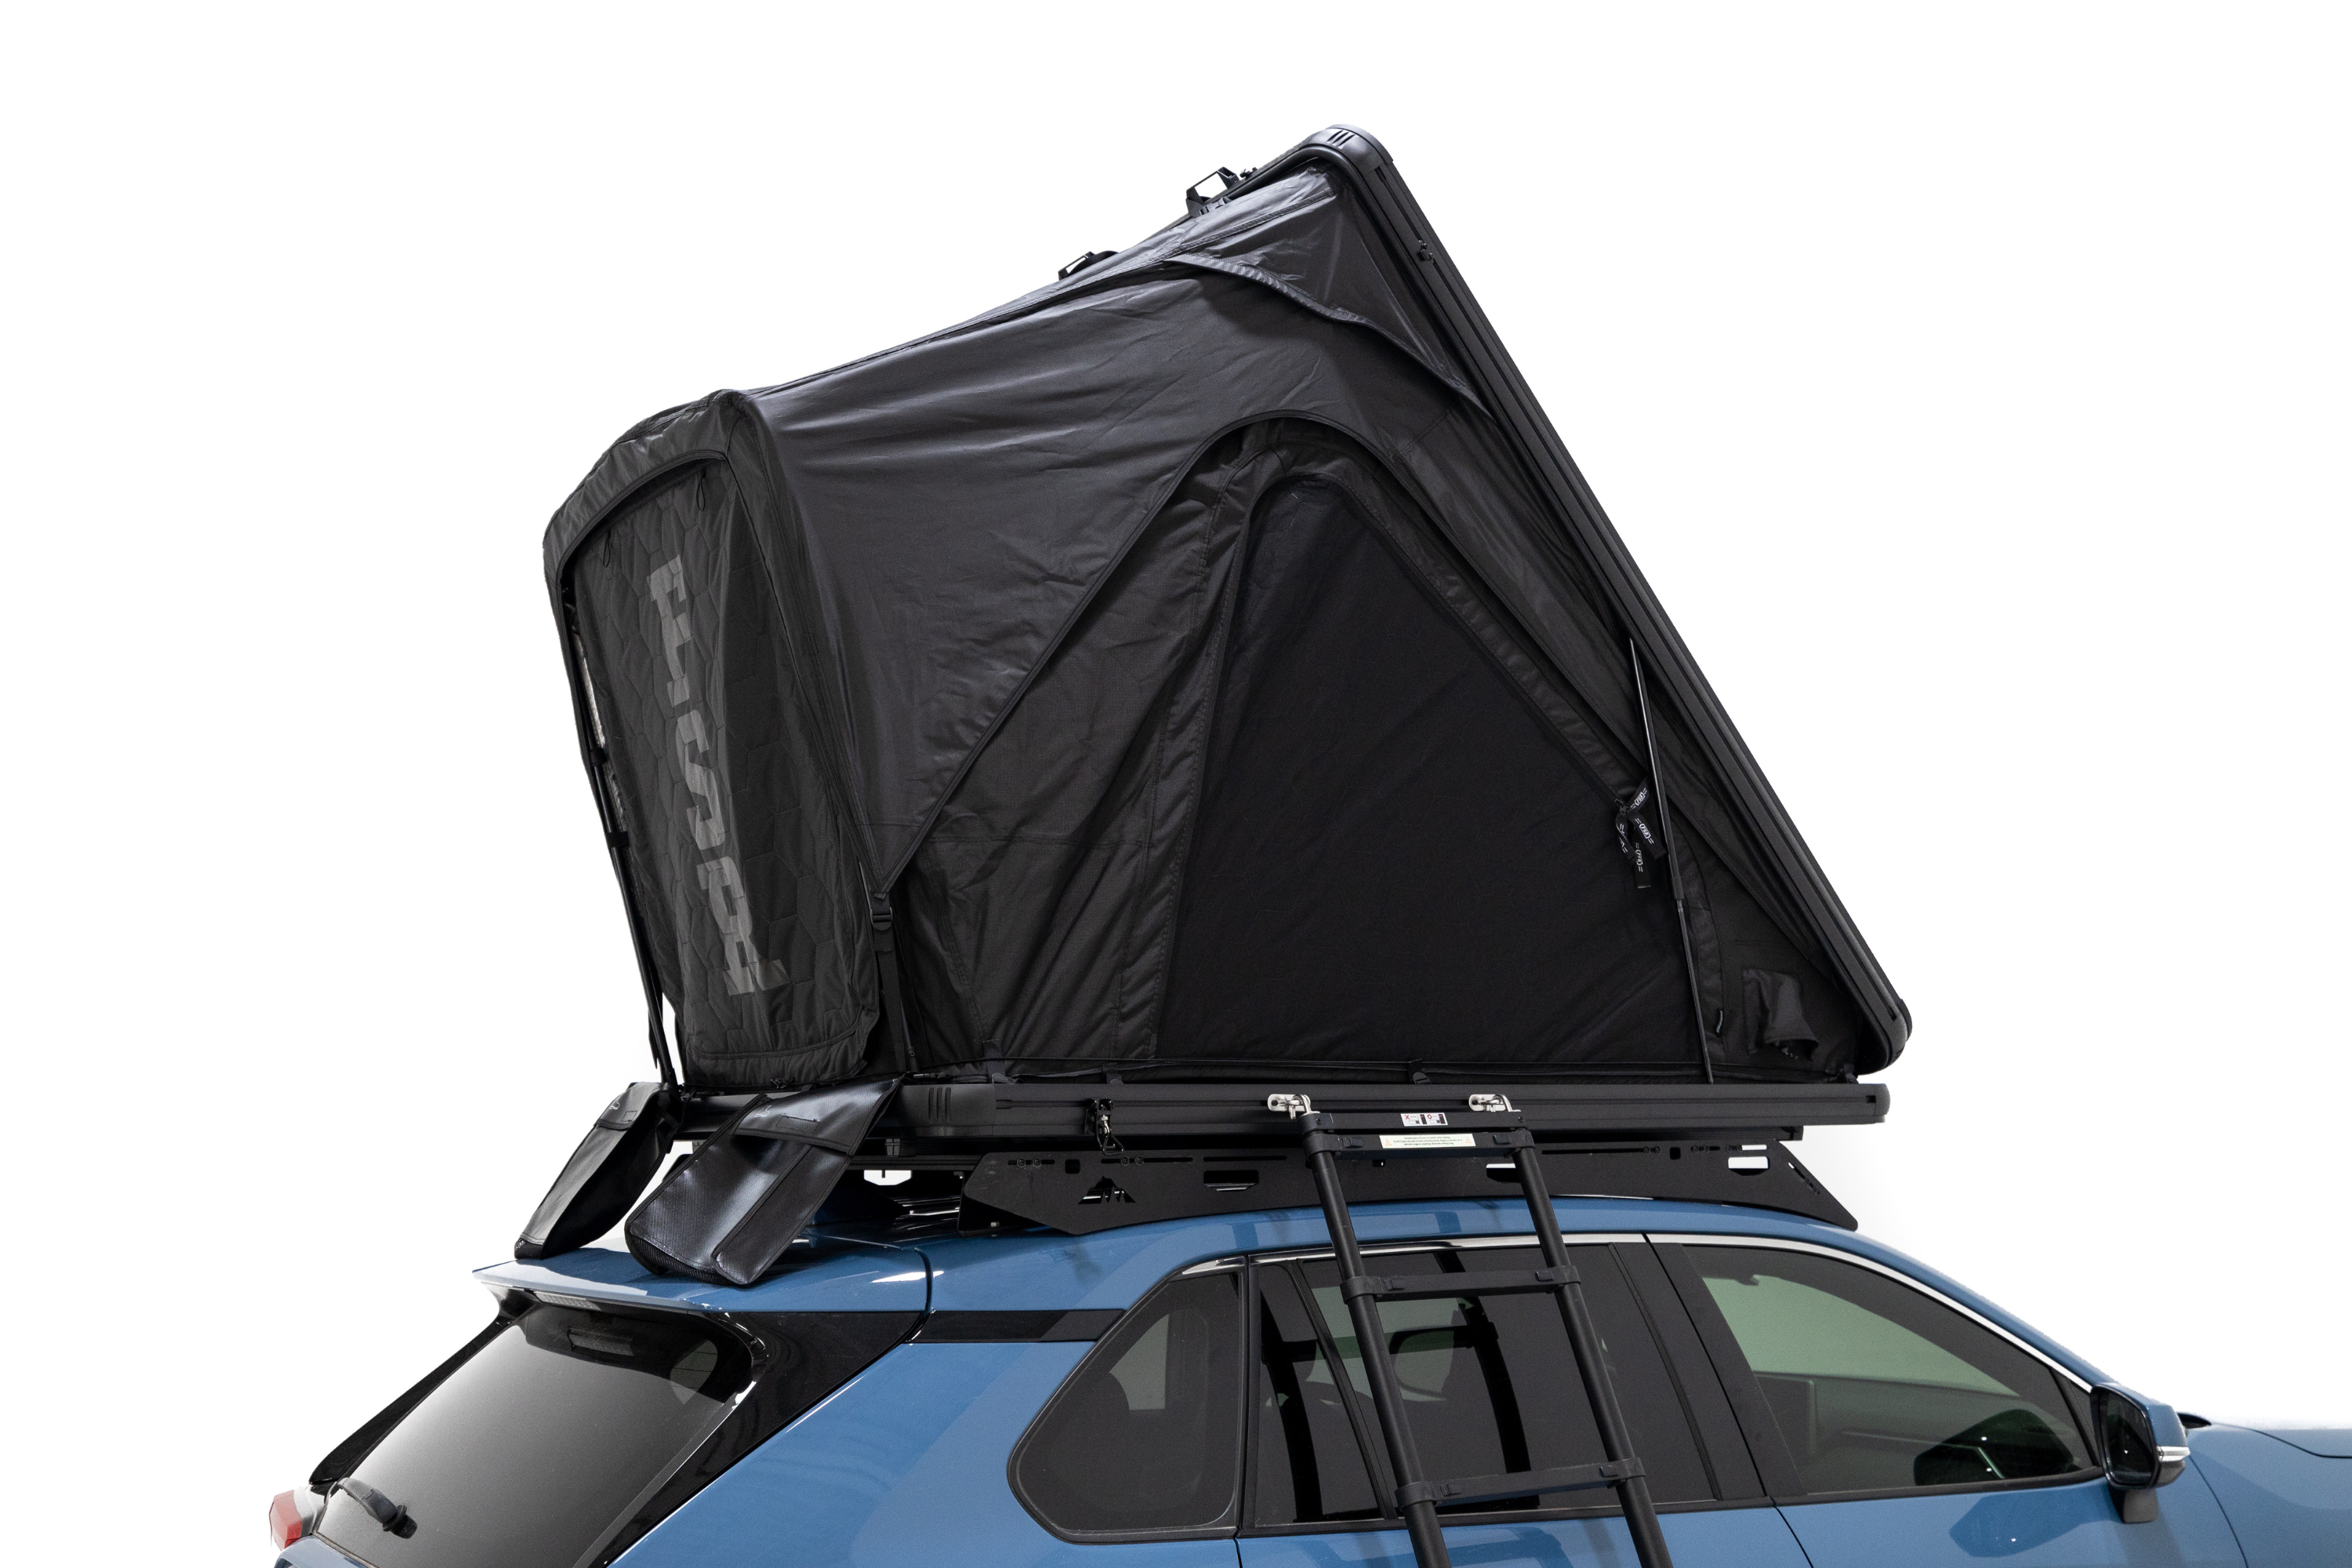 Aspen Lite Standard - Rooftop Tent